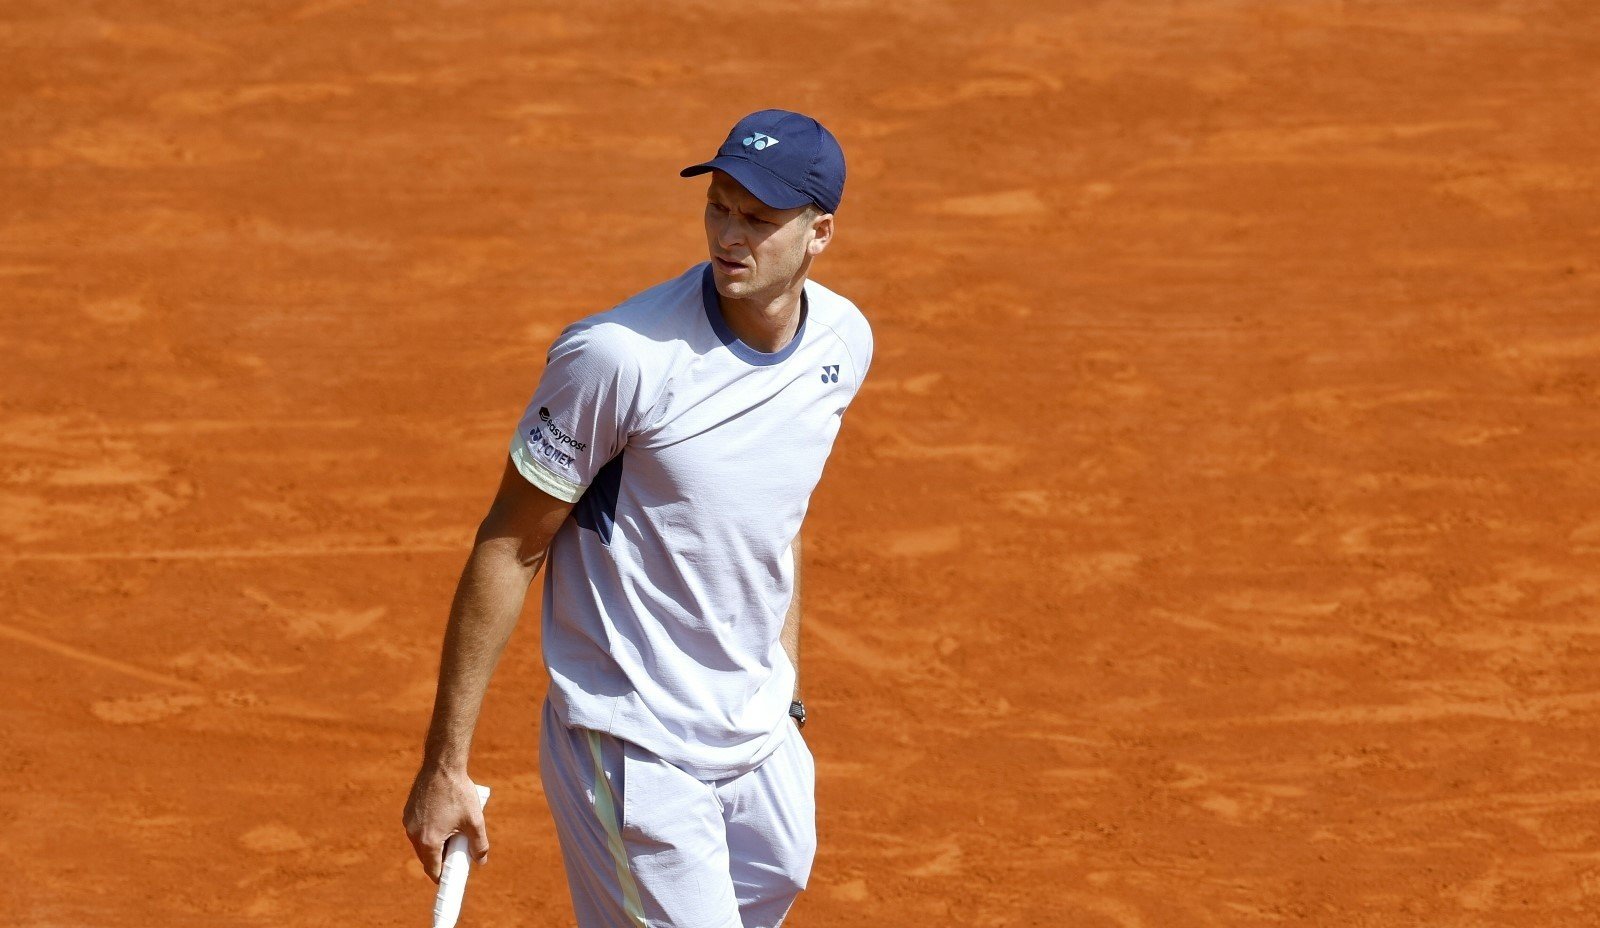 Hubert Hurkacz piątym w rankingu ATP po triumfie nad Stefanosem Tsitsipasem w Monte Carlo